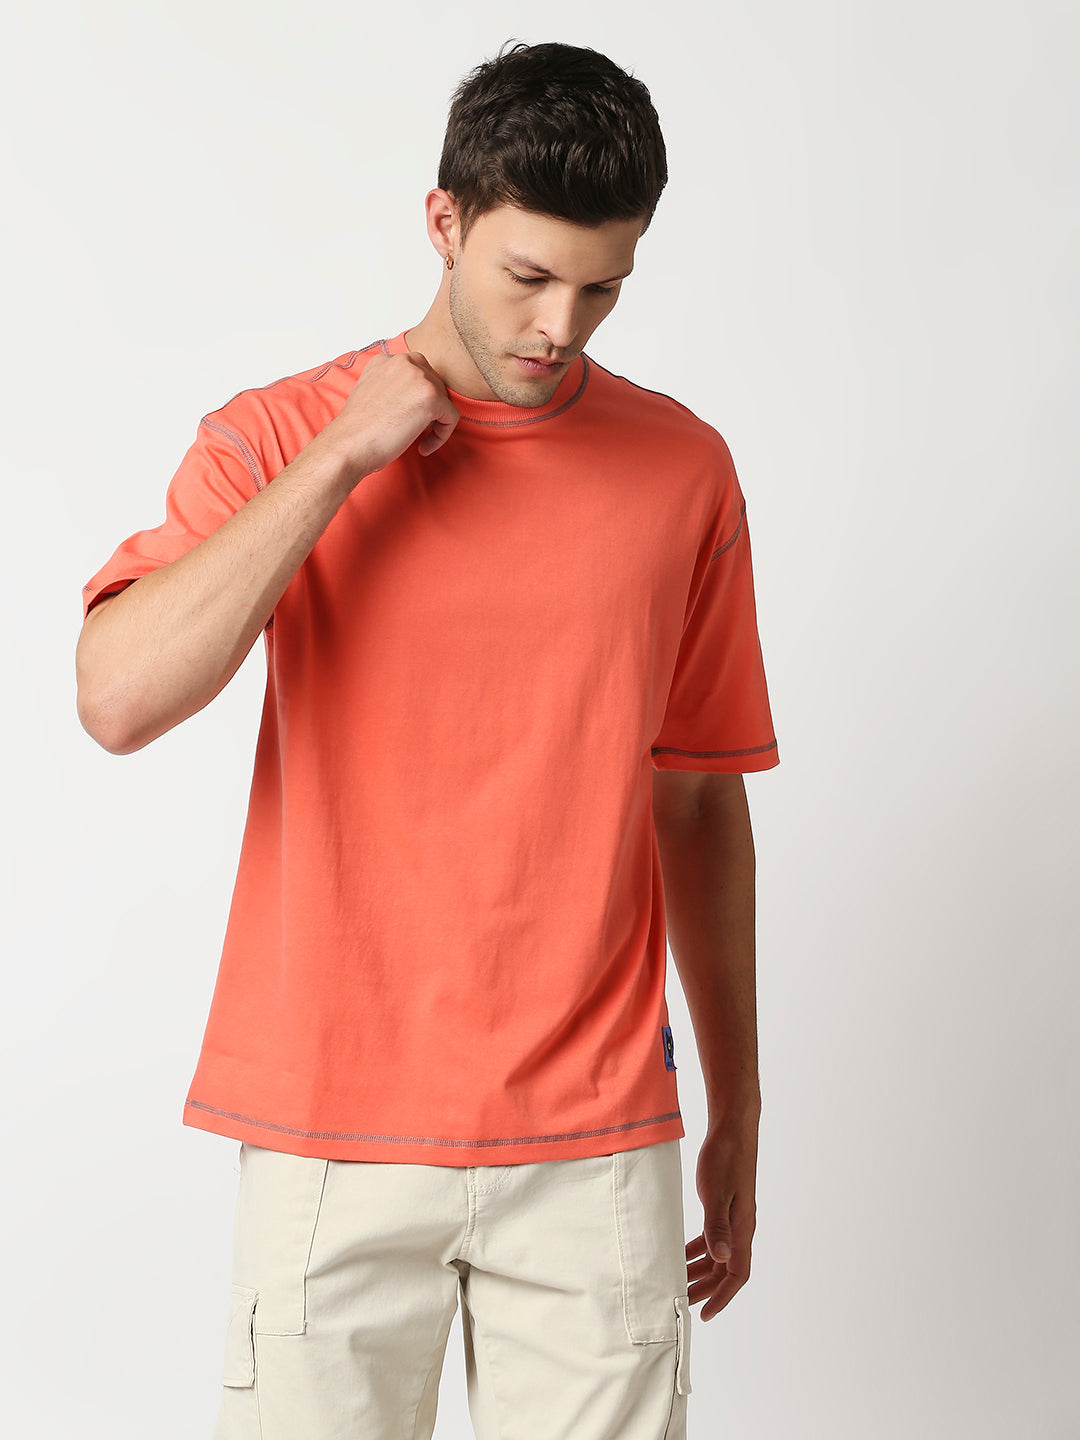 Buy Blamblack Men's Coral Color Plain Baggy T Shirt